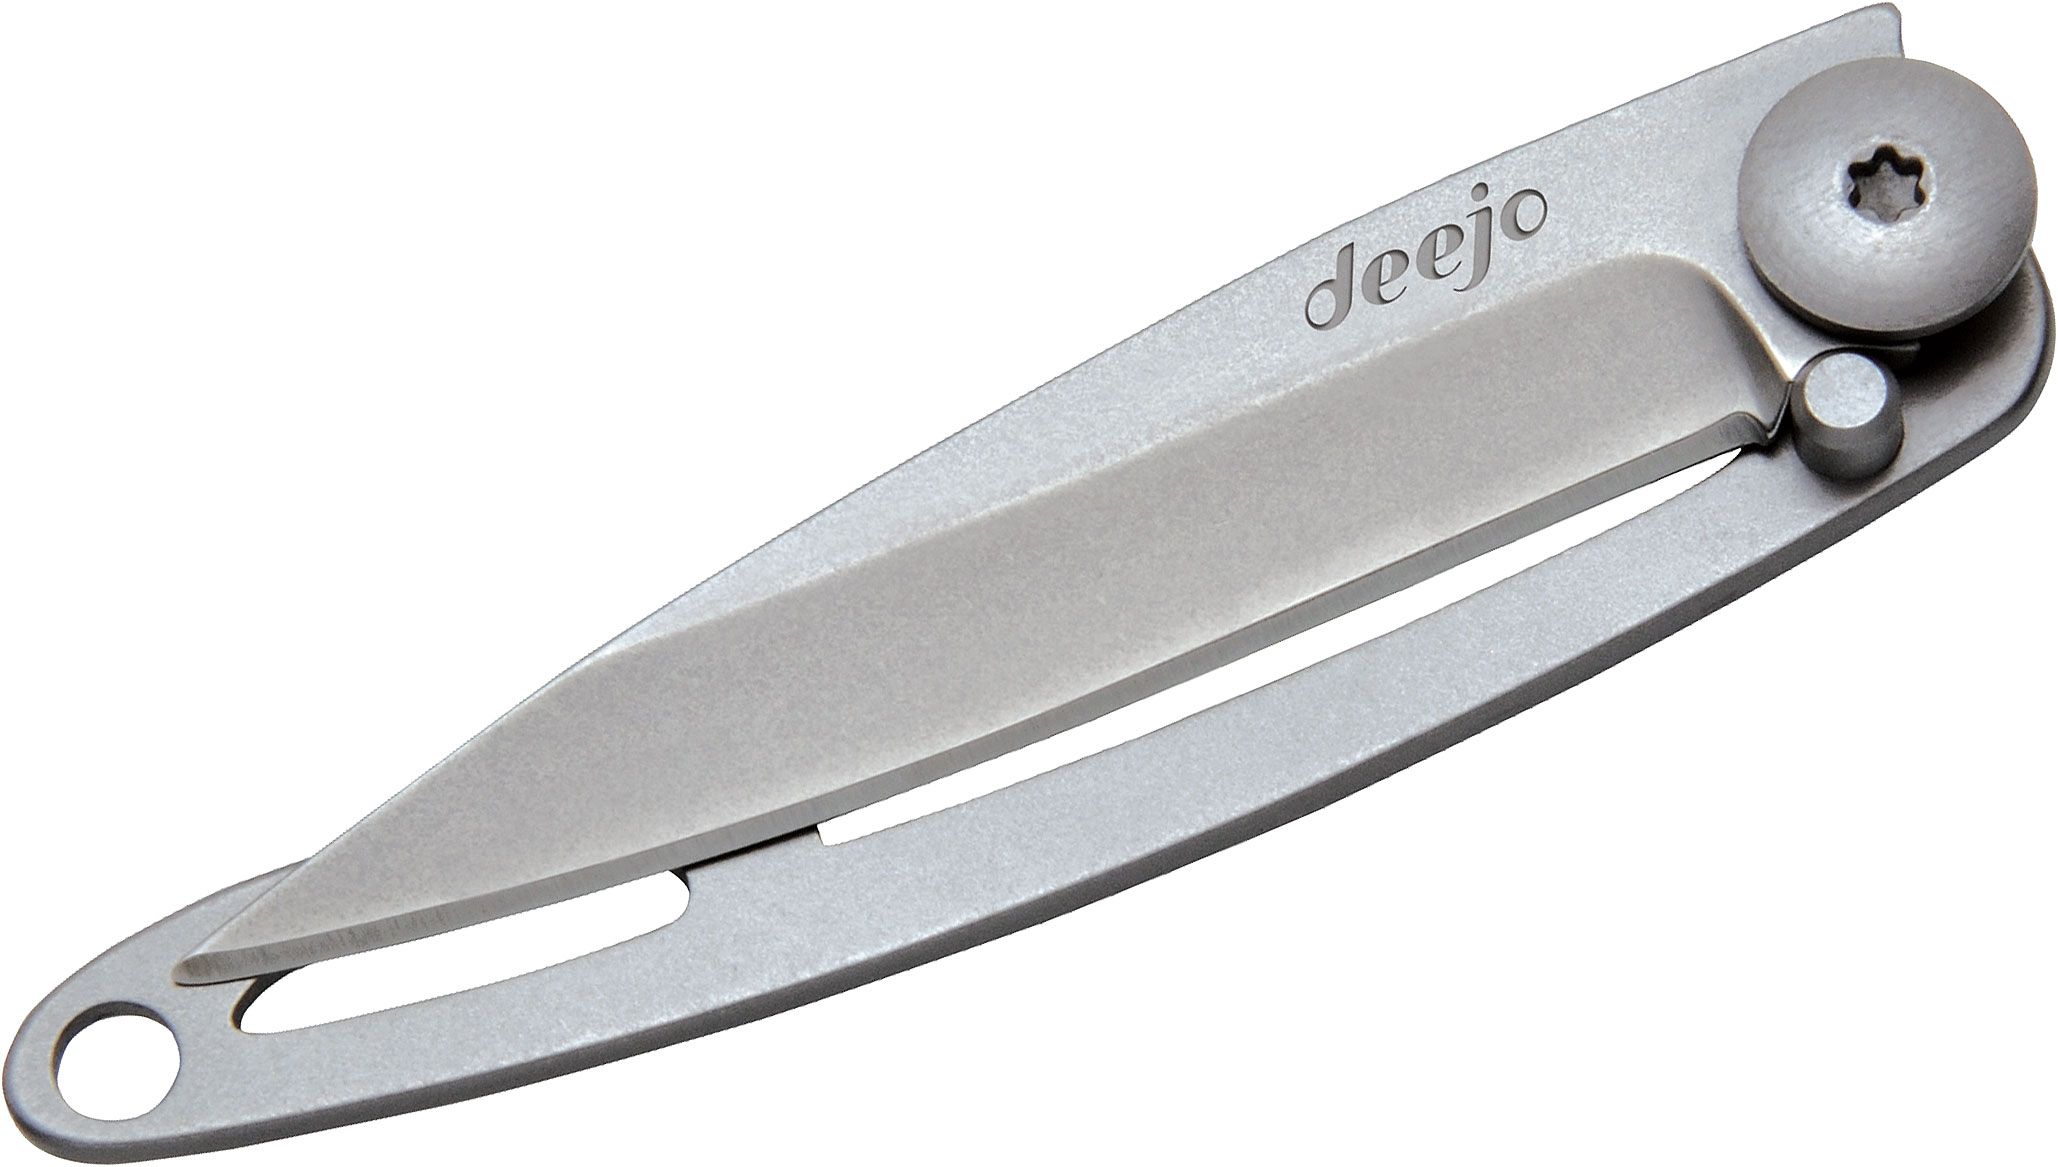 Deejo Knives Color Pink Polycarbonate 27g Folding Knife 3 